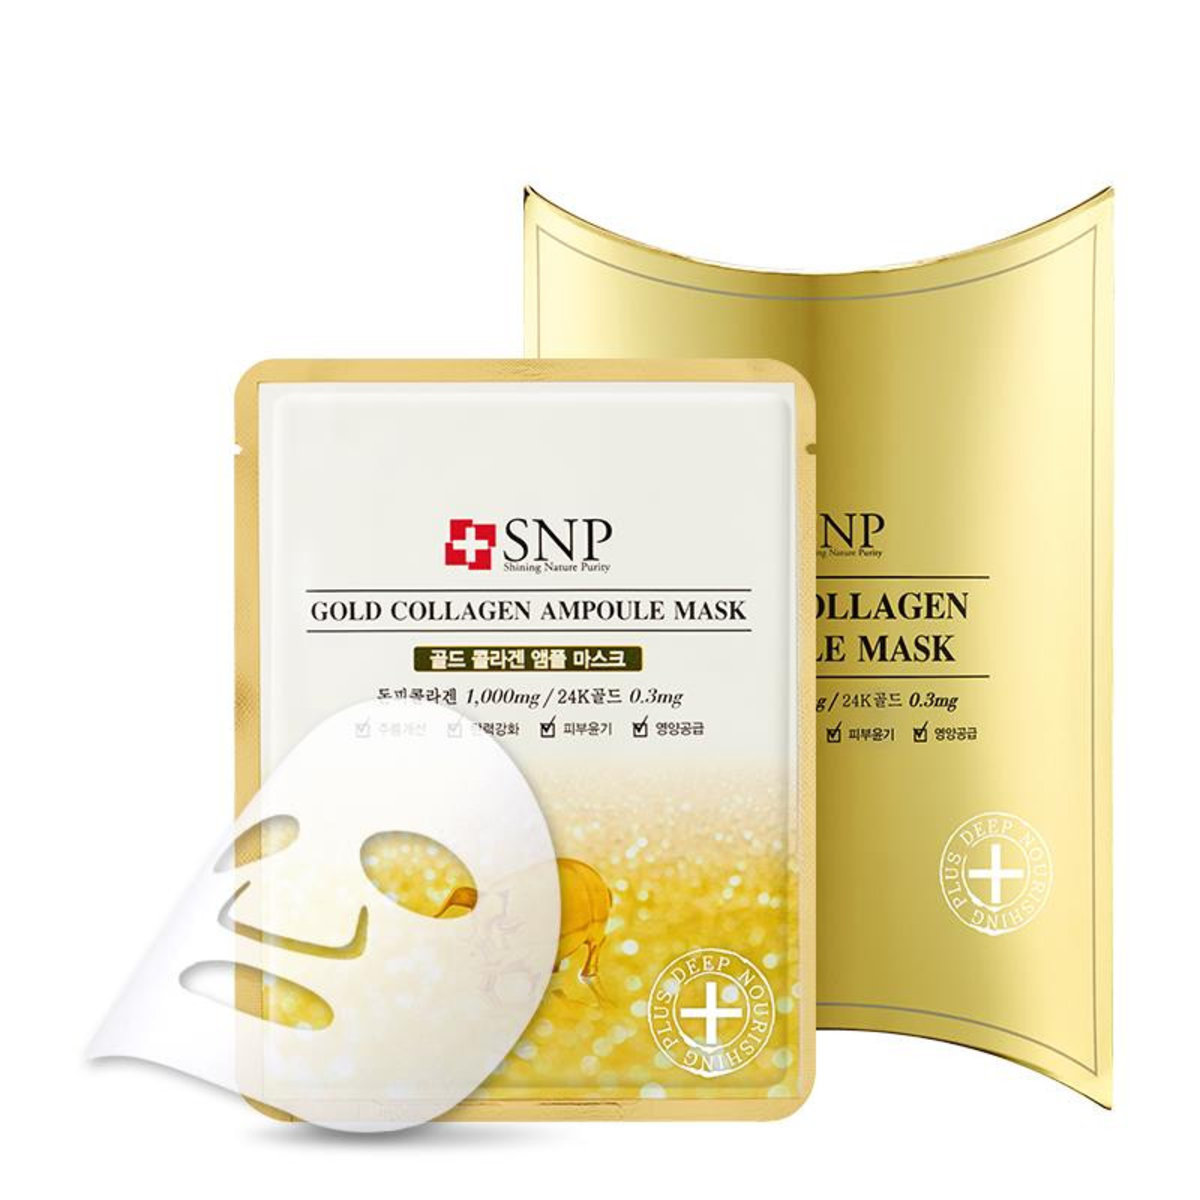 Маски том 10. SNP Gold Collagen Ampoule Mask. Тканевые маски Корея SNP. Gold Birds Nest маска для лица корейская. Голд коллаген маска Корея.